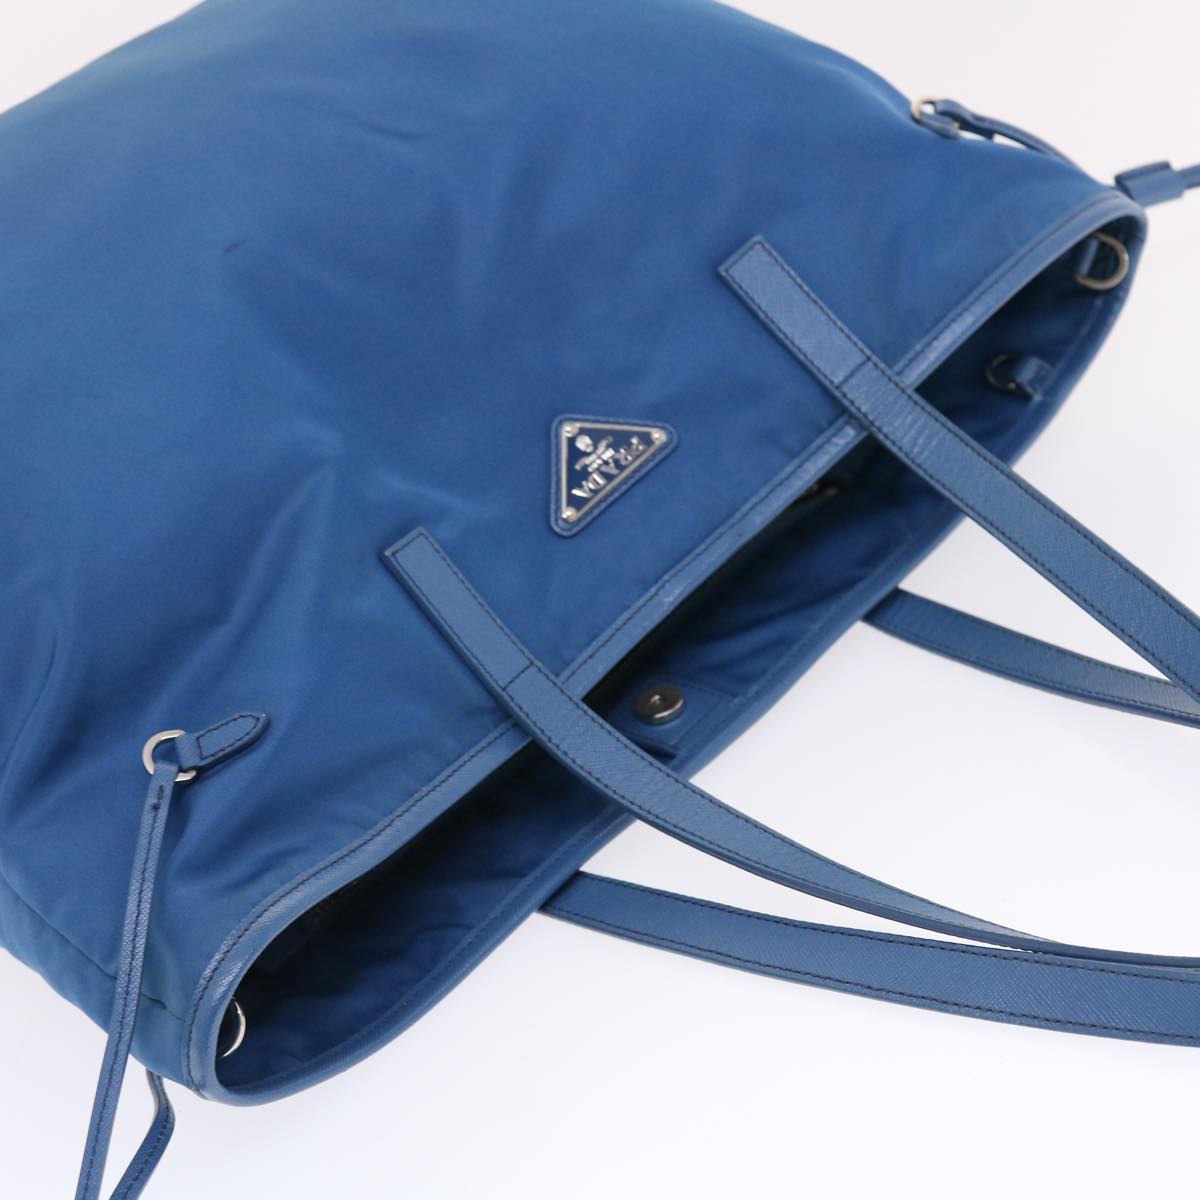 PRADA Tote Bag Nylon 2way Blue Auth 49821